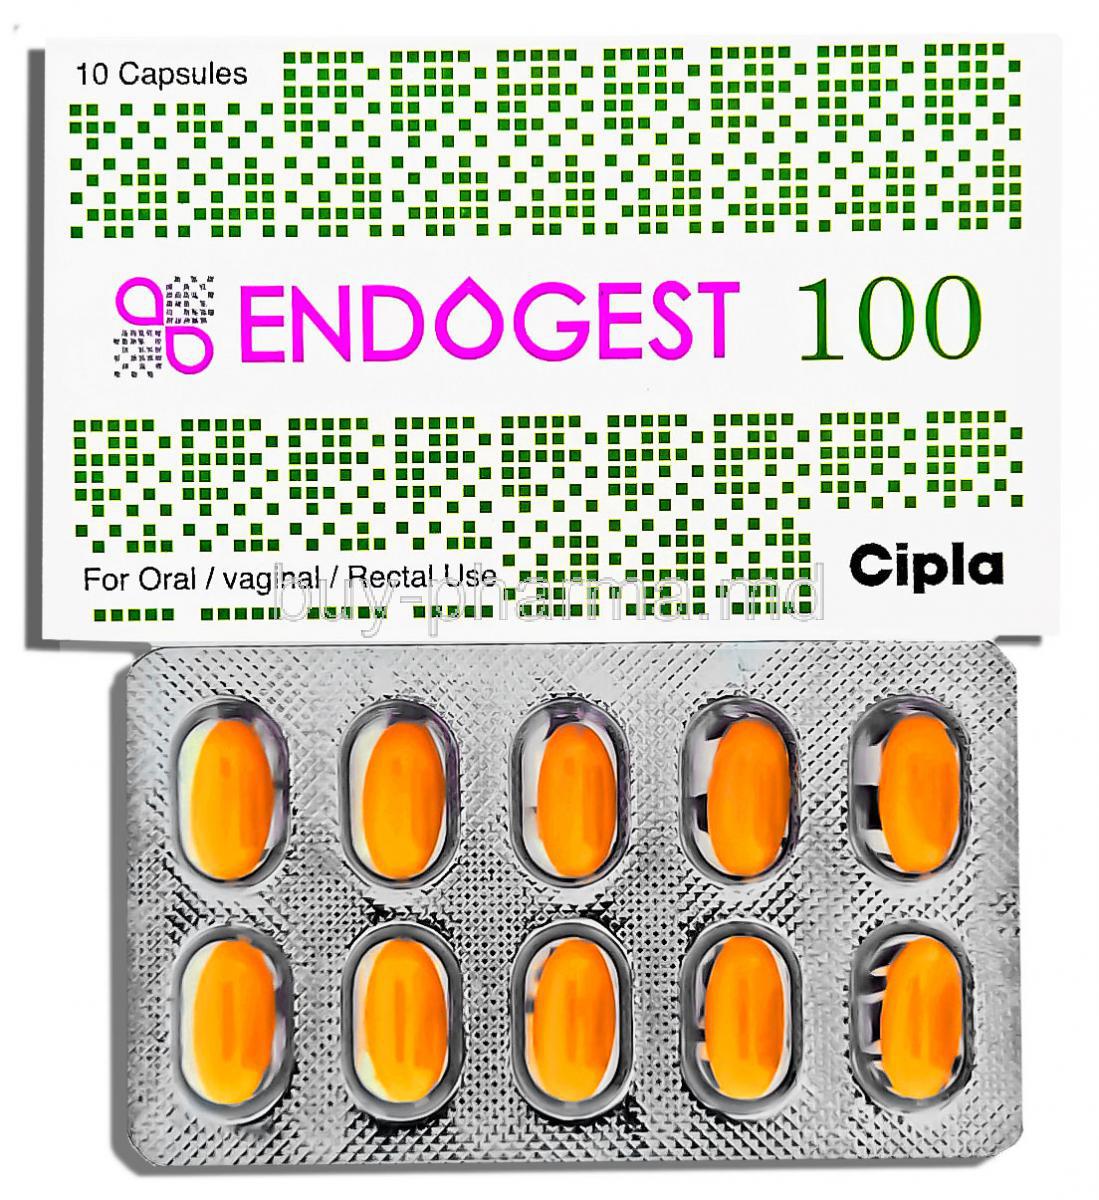 Generic Prochieve, Endogest, Progesterone   200 mg Soft Gelatin Capsule (Cipla)